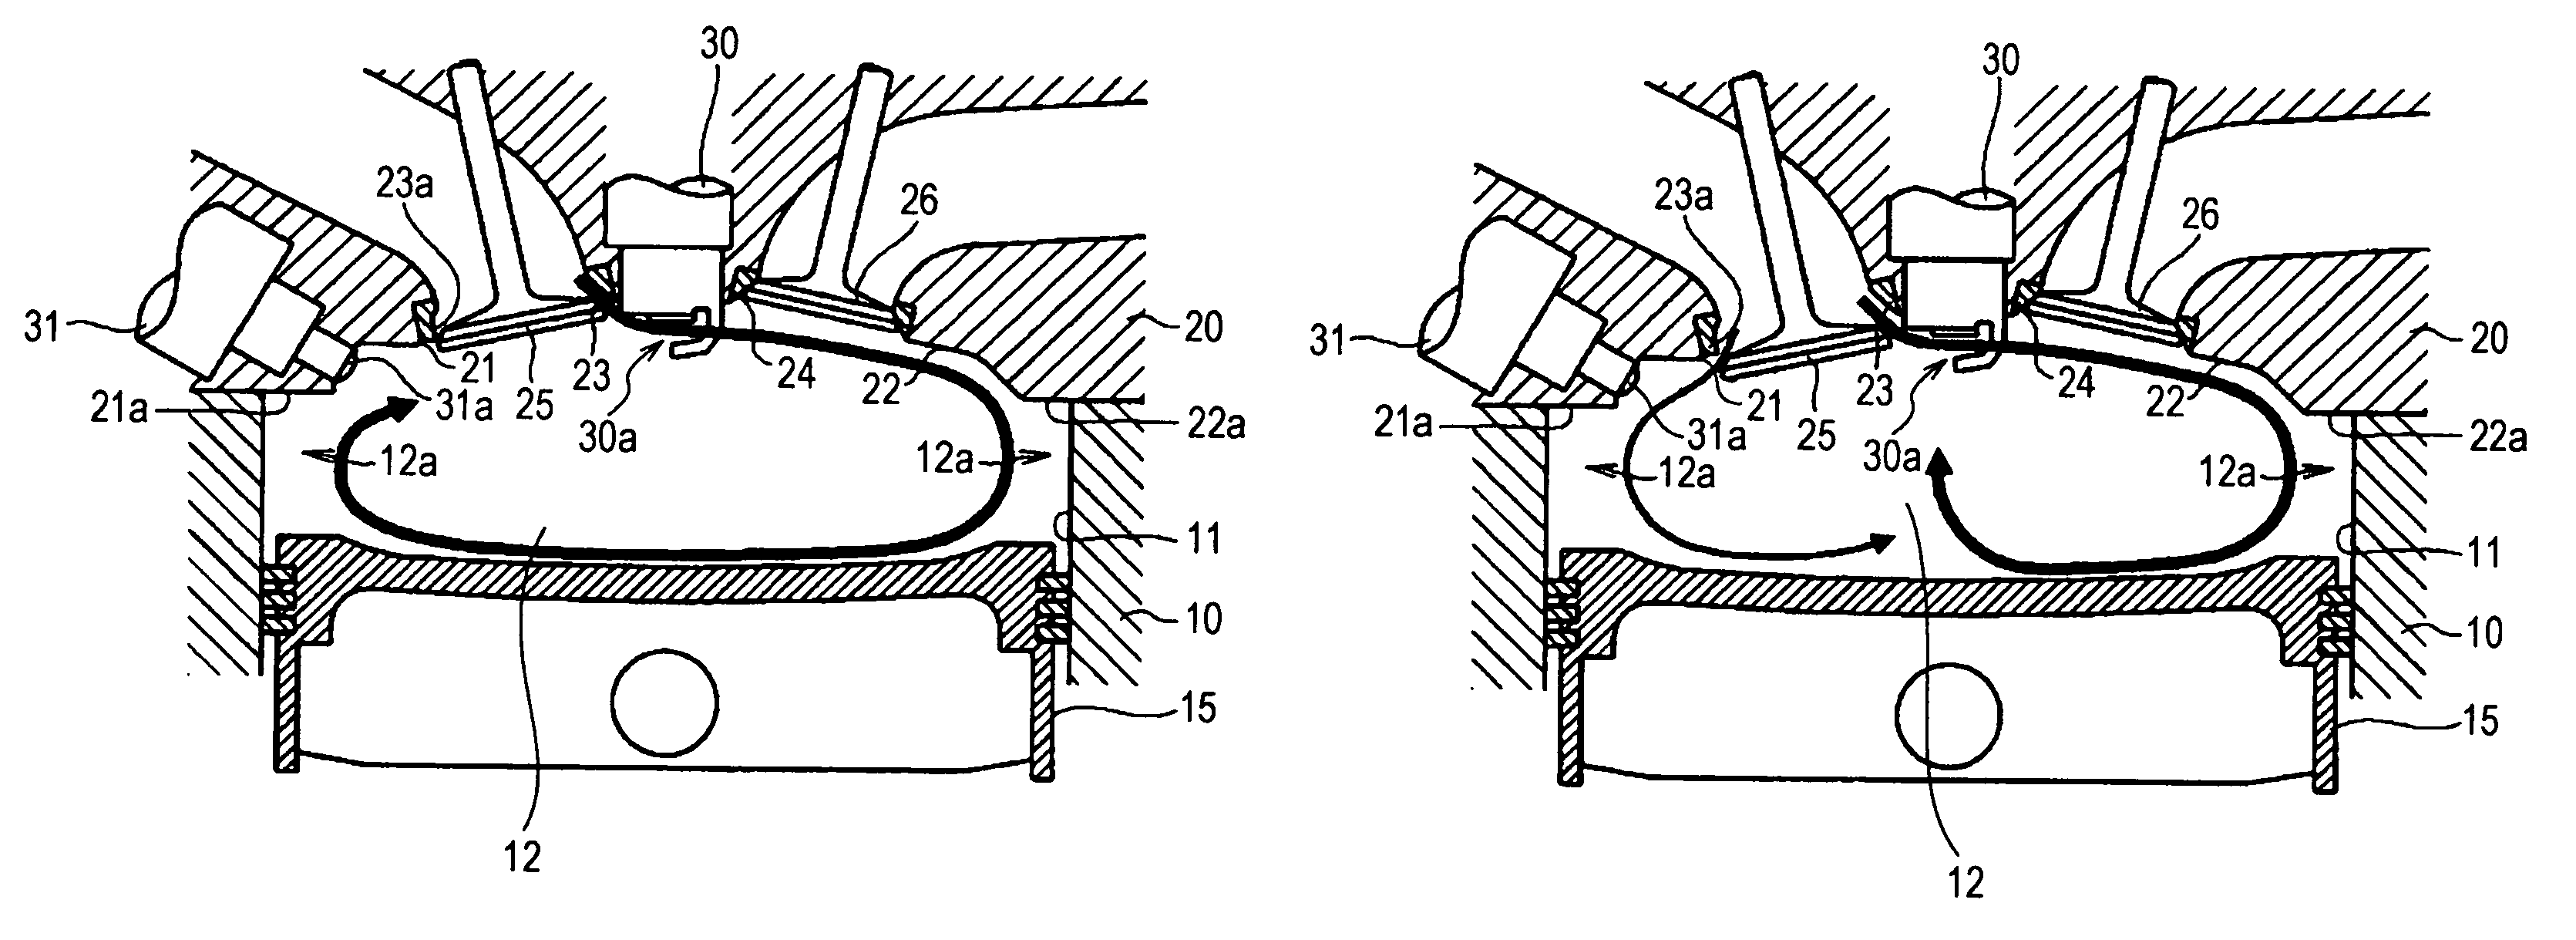 Cylinder injection engine